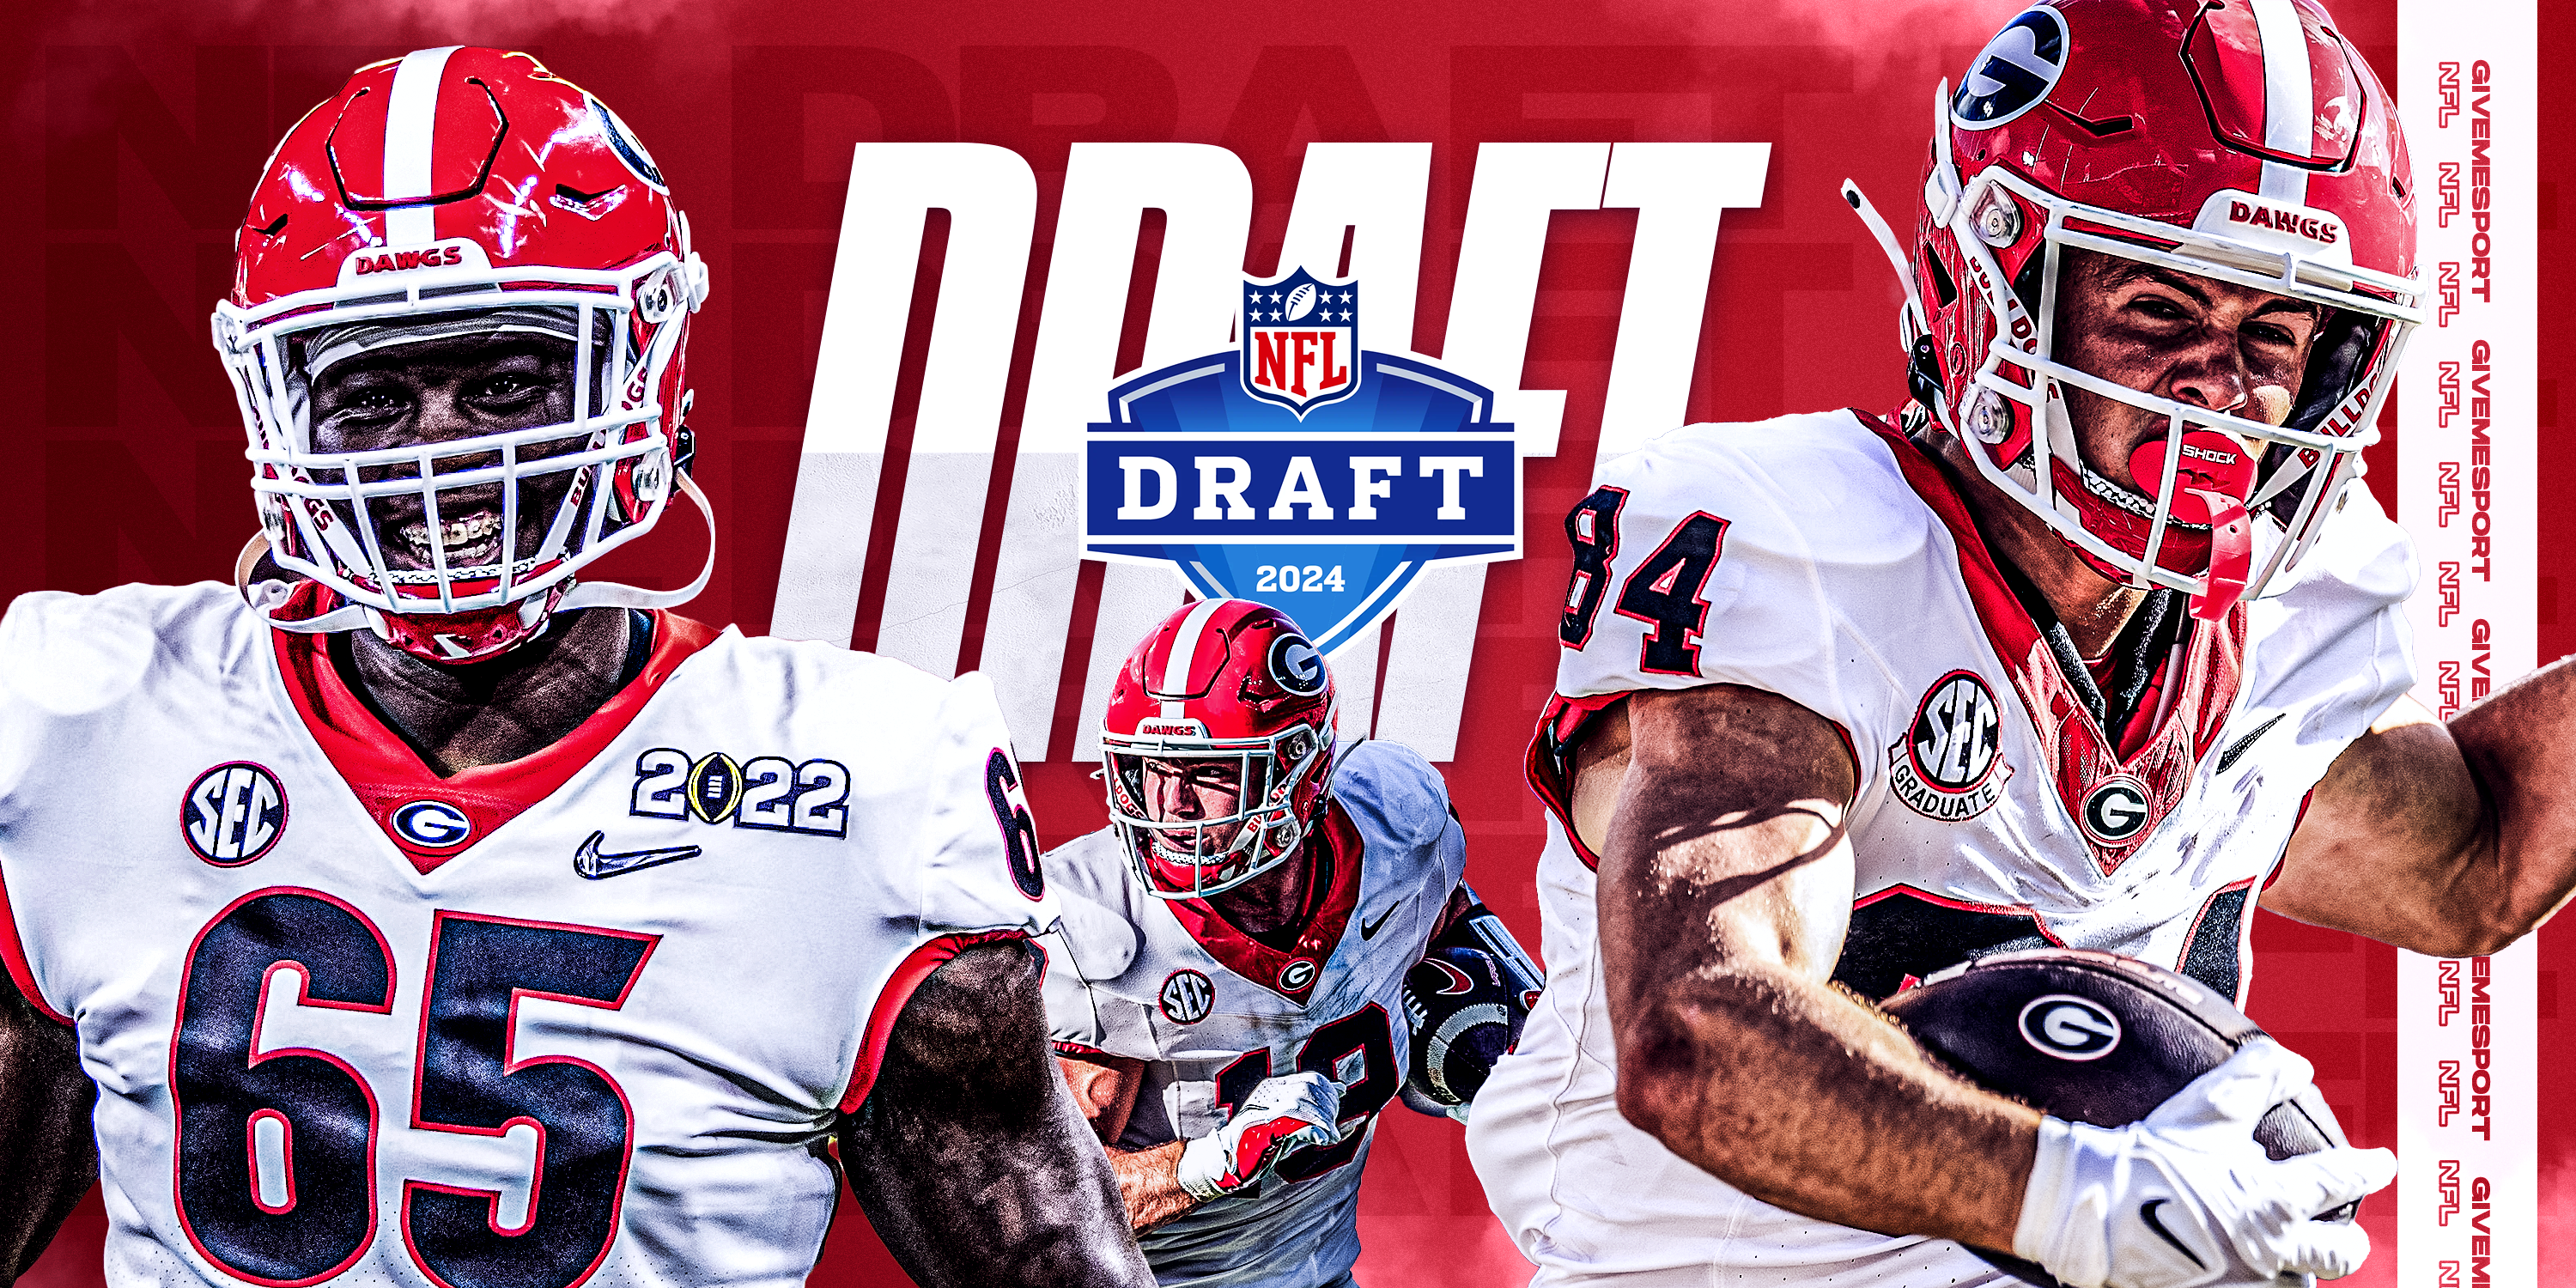 Georgia NFL Draft